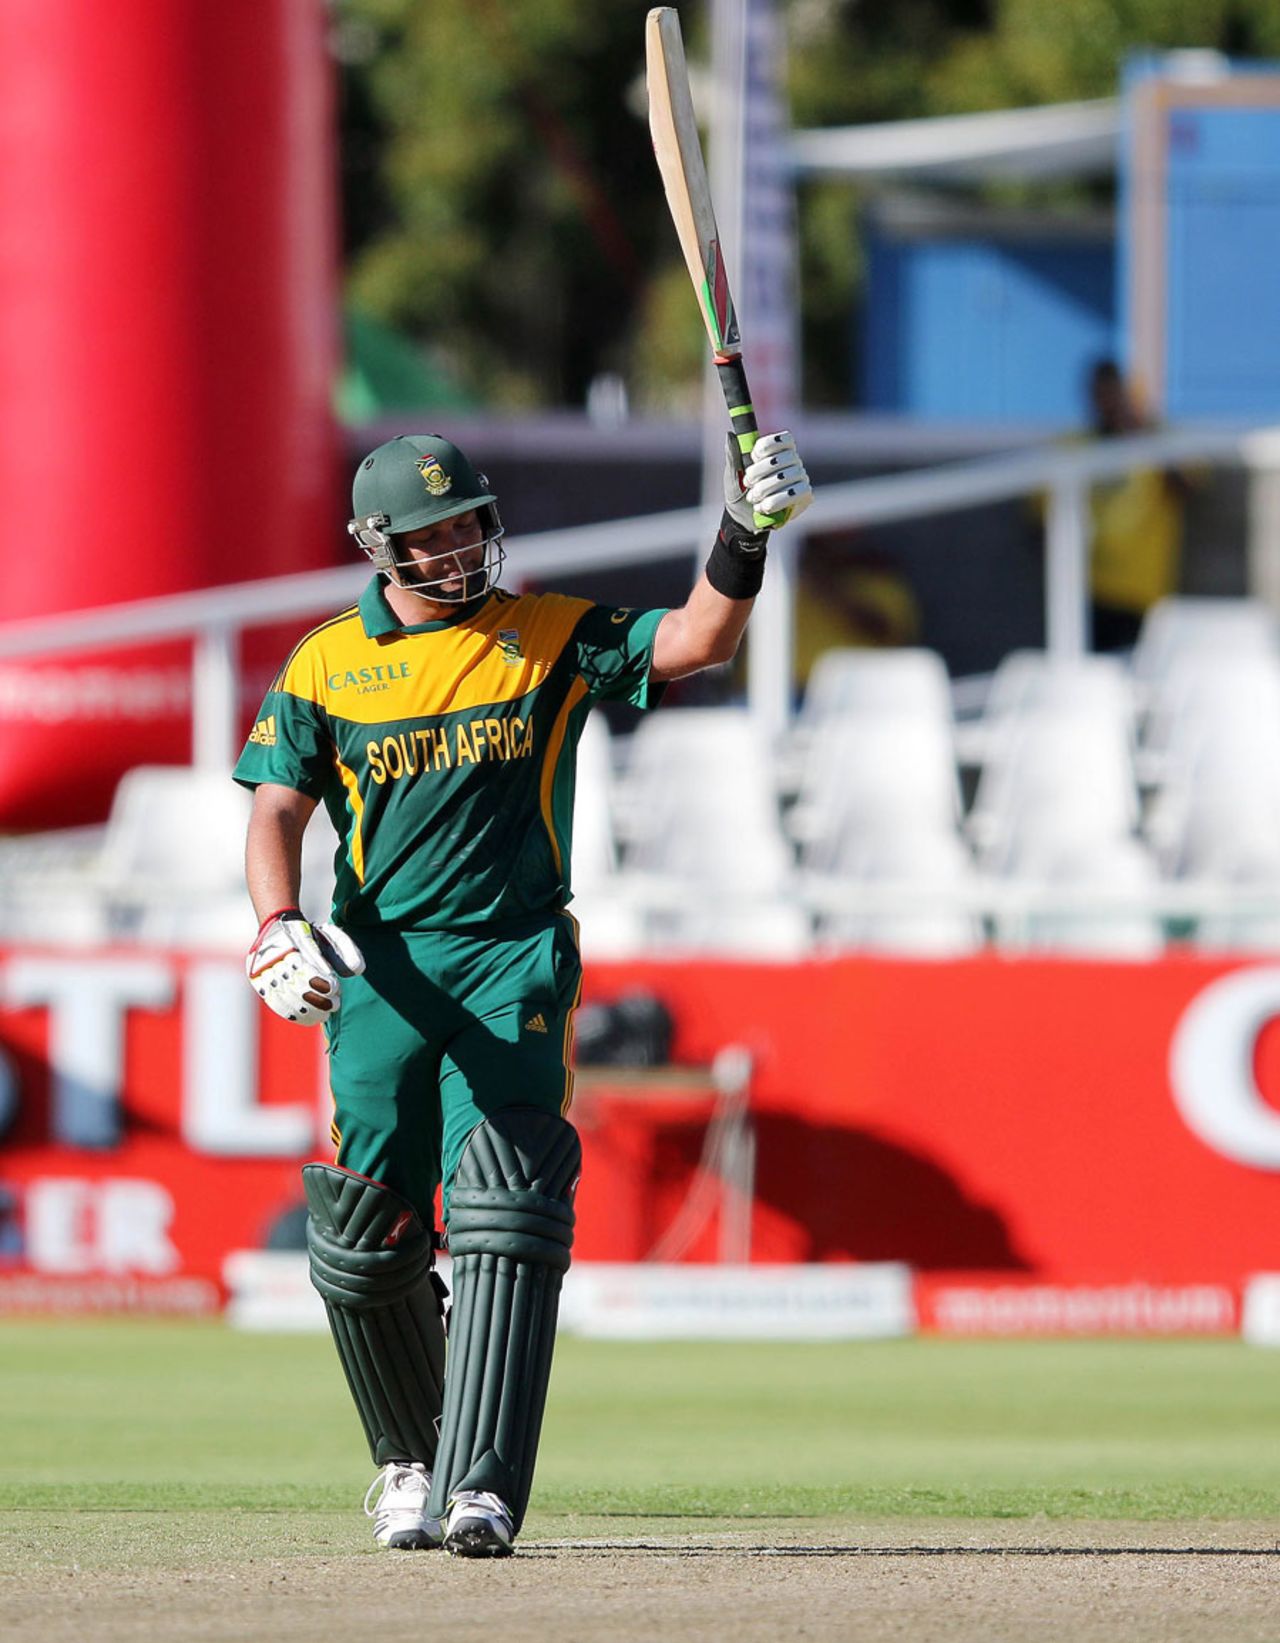 Jacques Kallis raises the bat after reaching his fifty, South Africa v Pakistan, 1st ODI, Cape Town, November 24, 2013